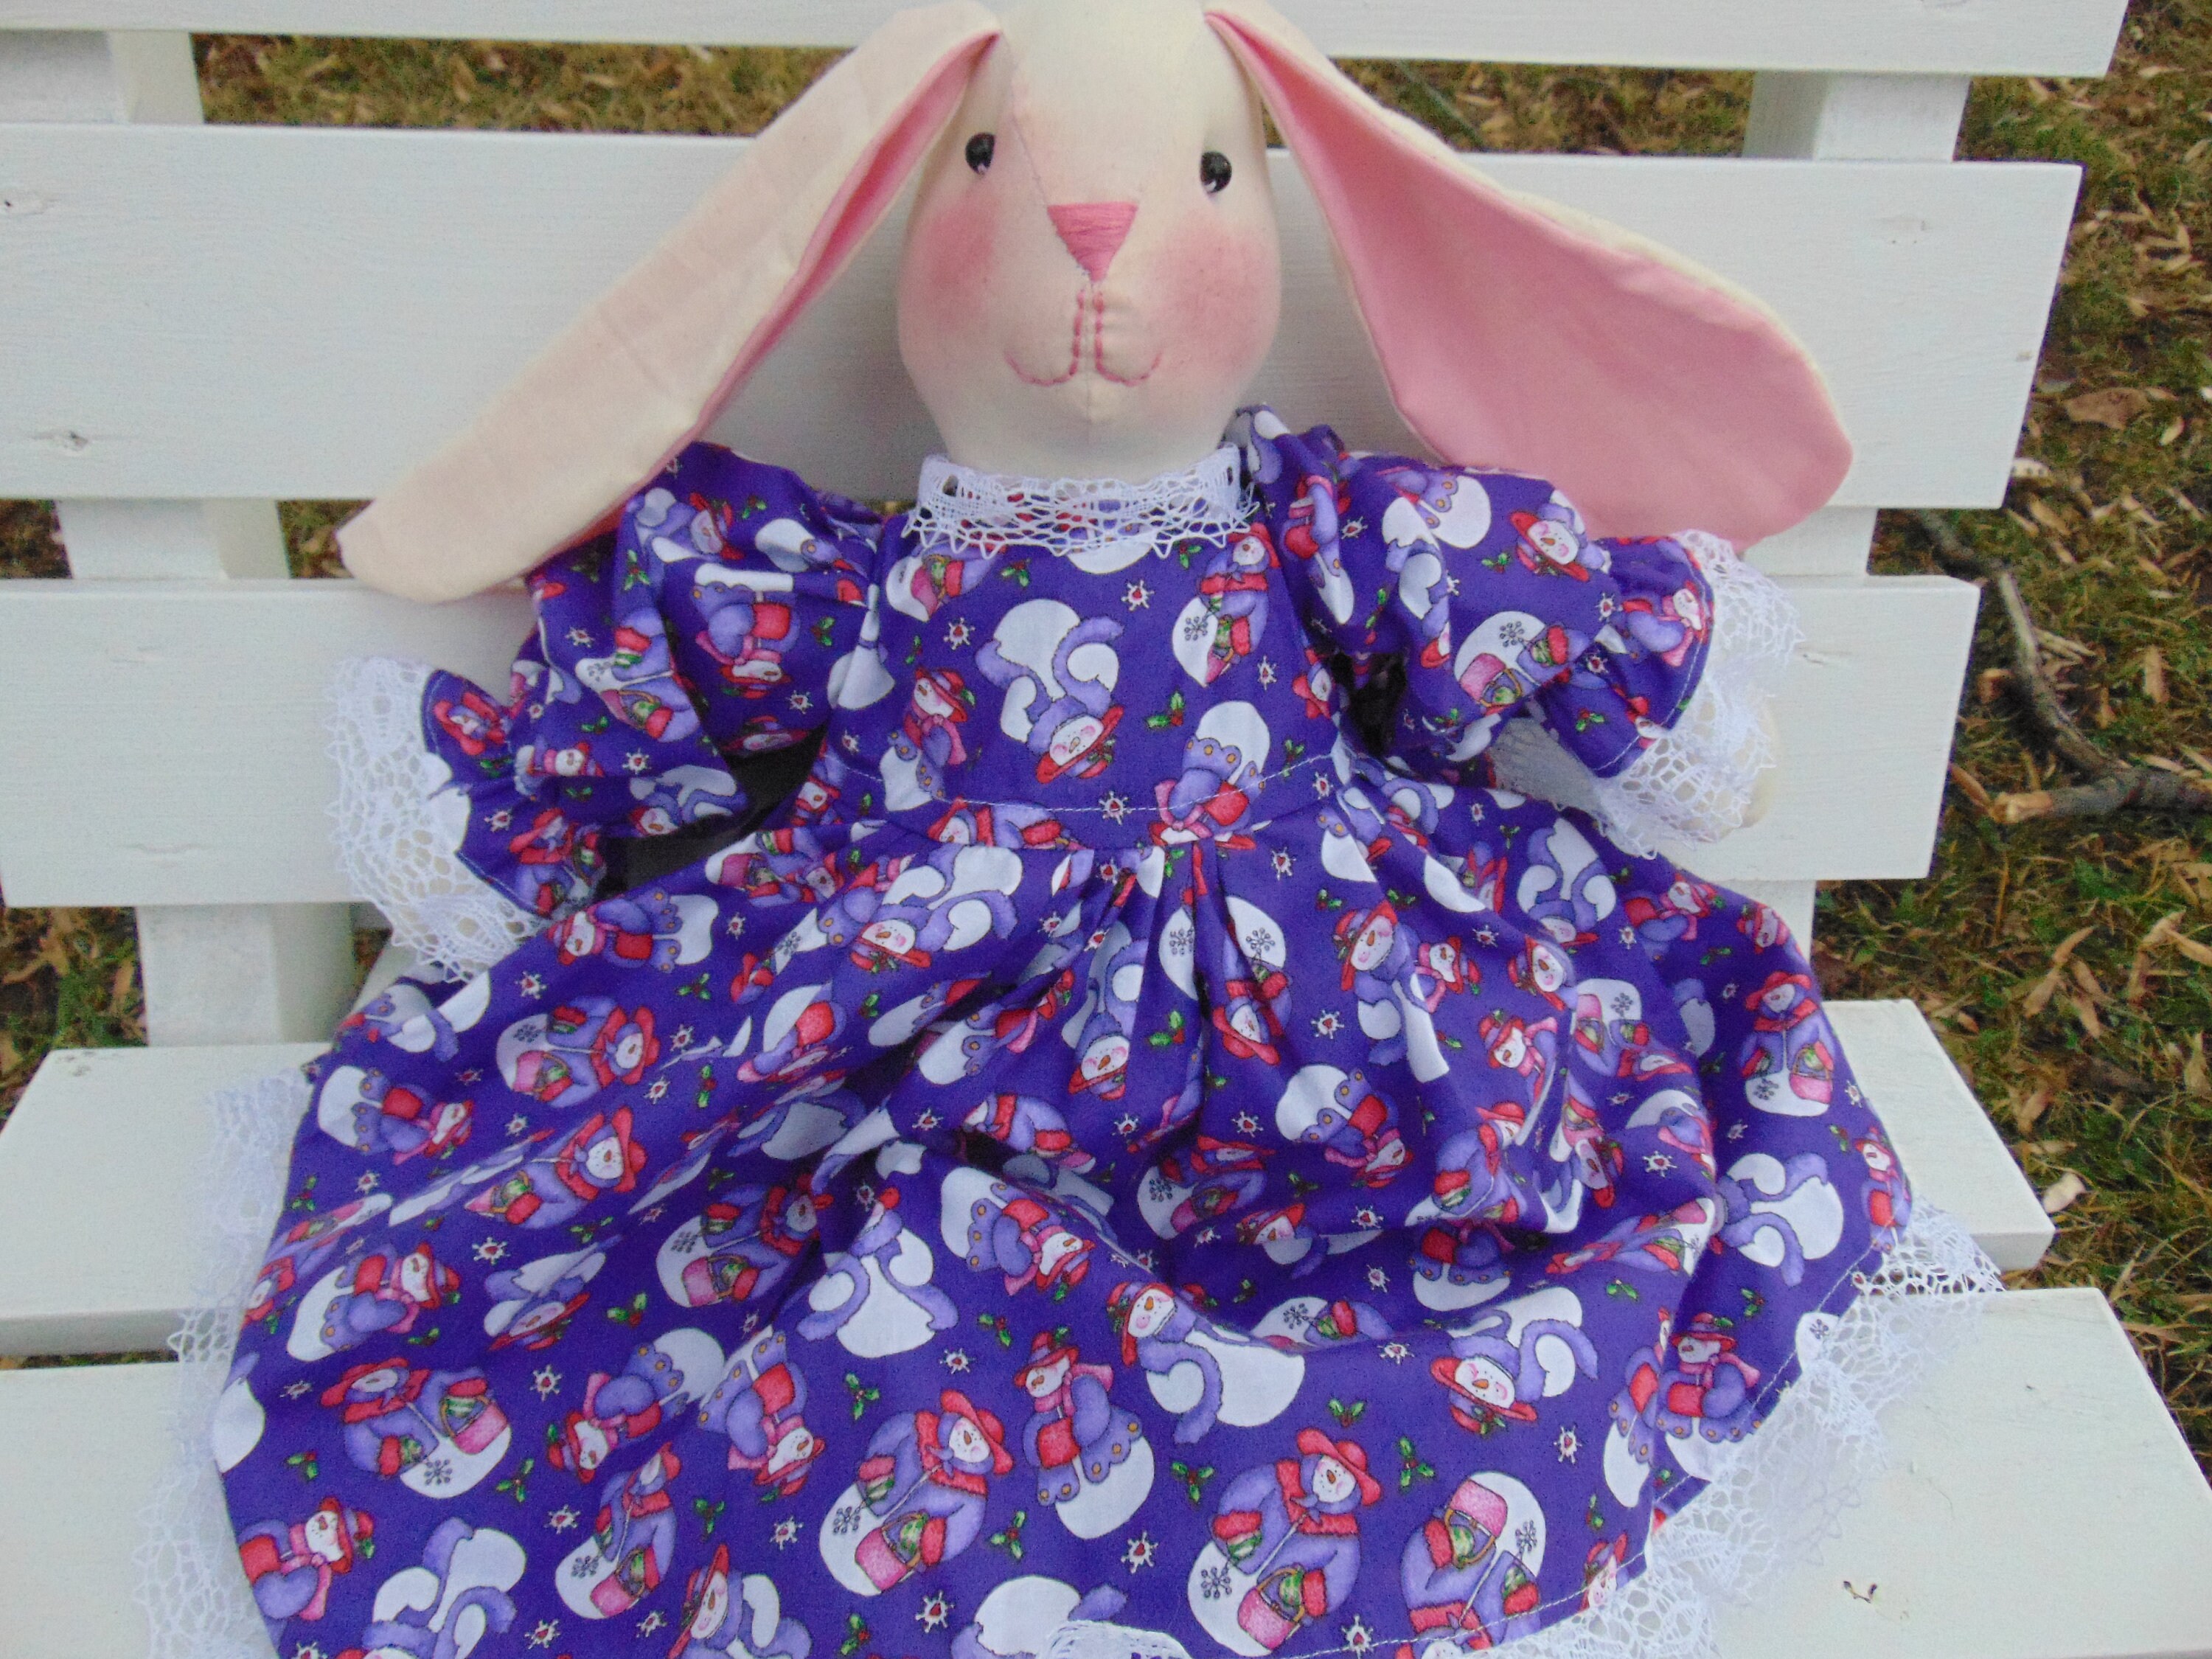 Merri the Stuffed Bunny Rabbit Doll - Etsy